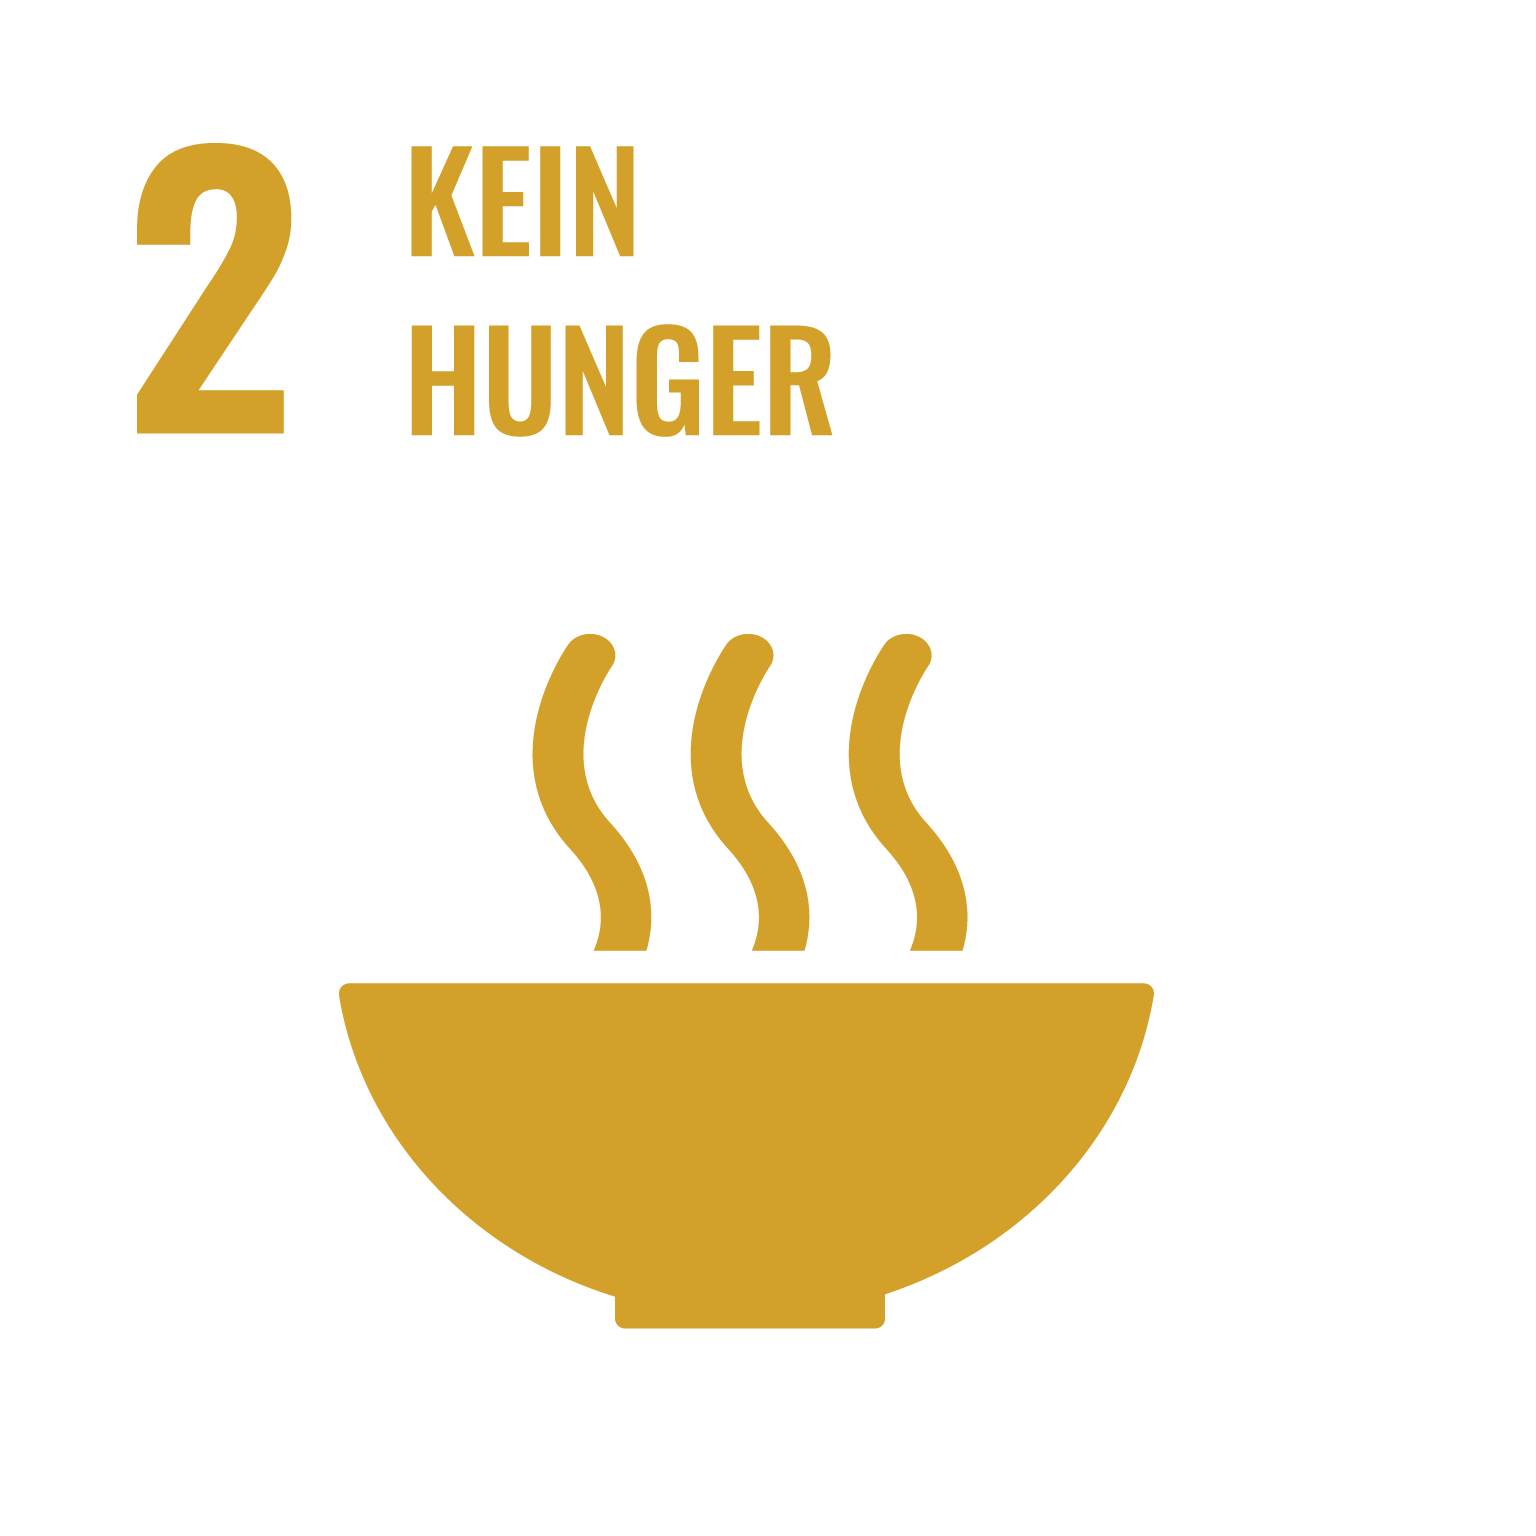 2. Kein Hunger